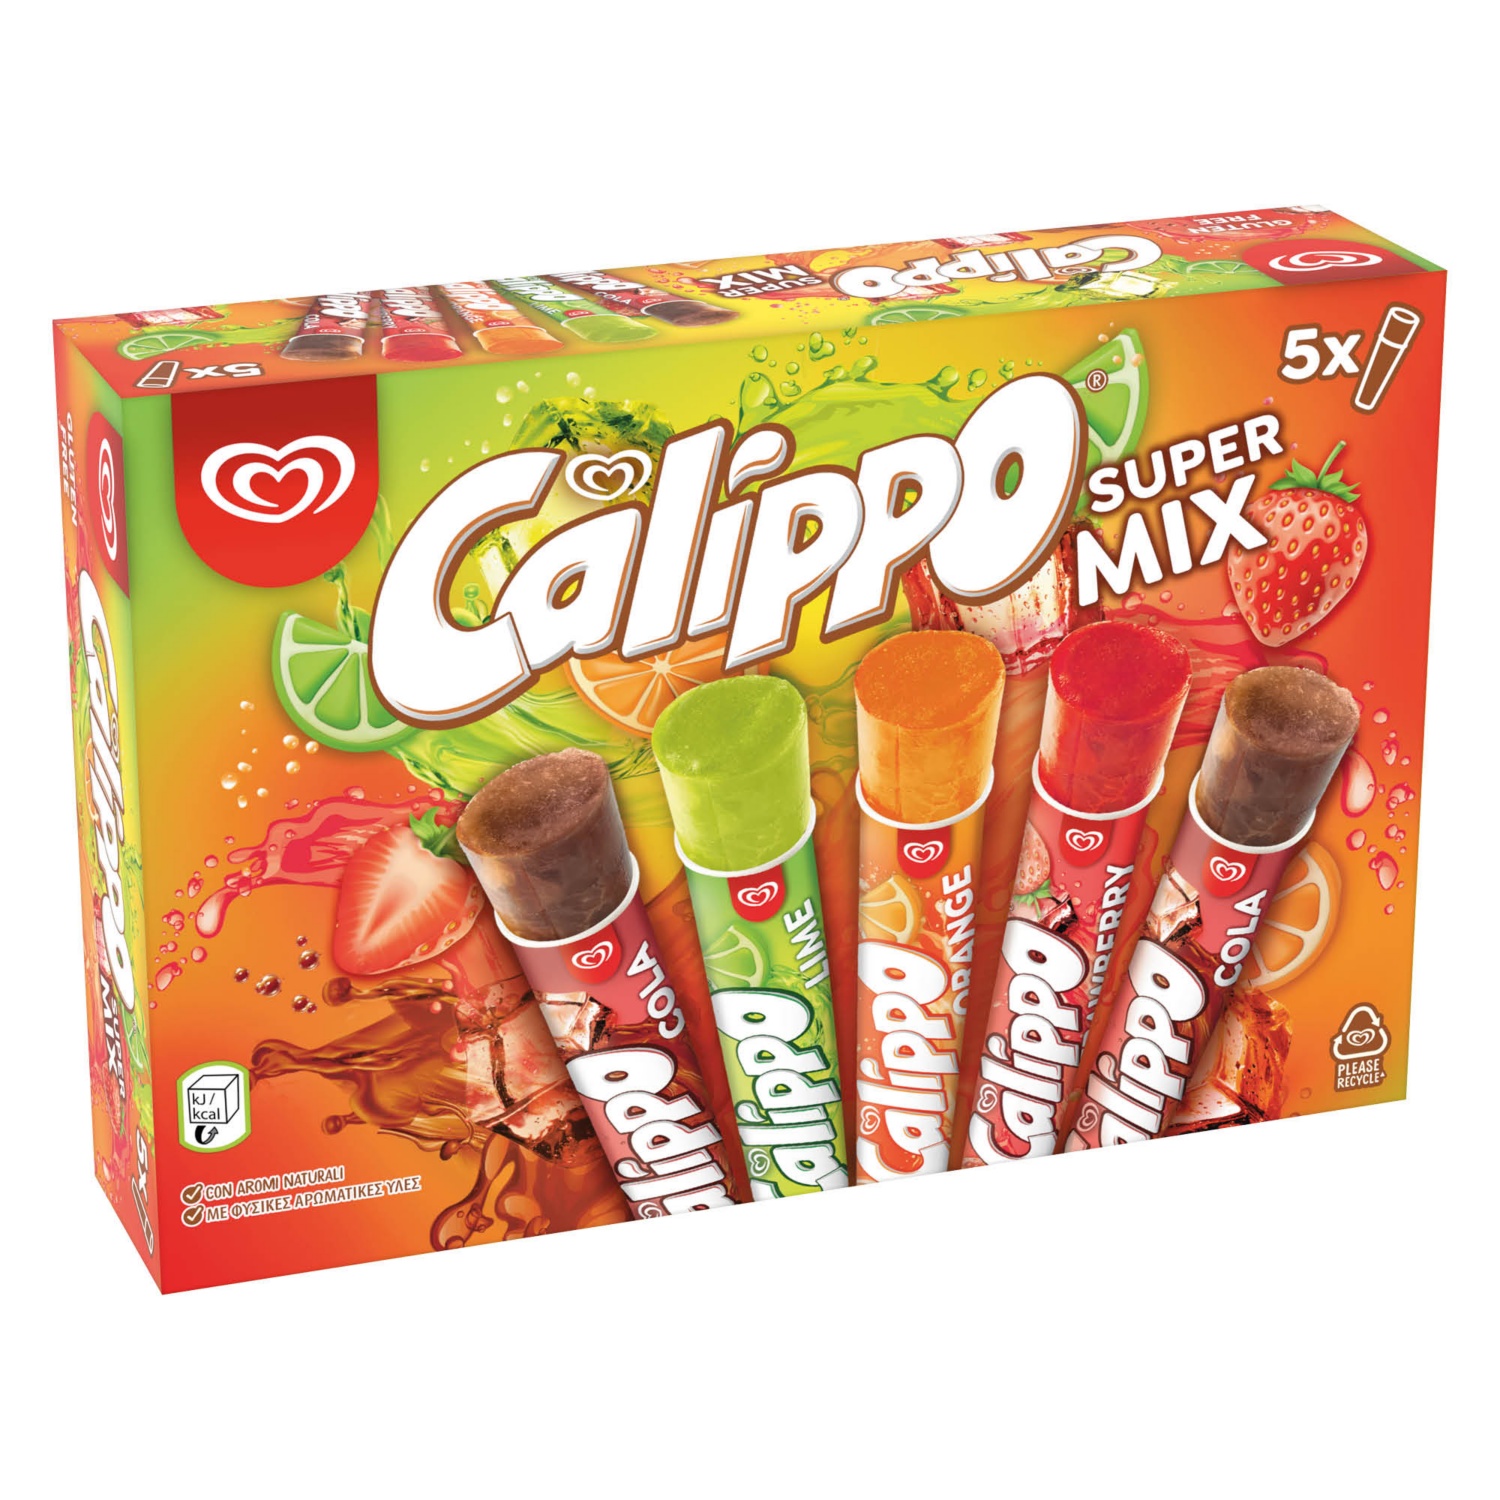 CALIPPO Calippo Super Mix jégkrém, 5 x 105 ml